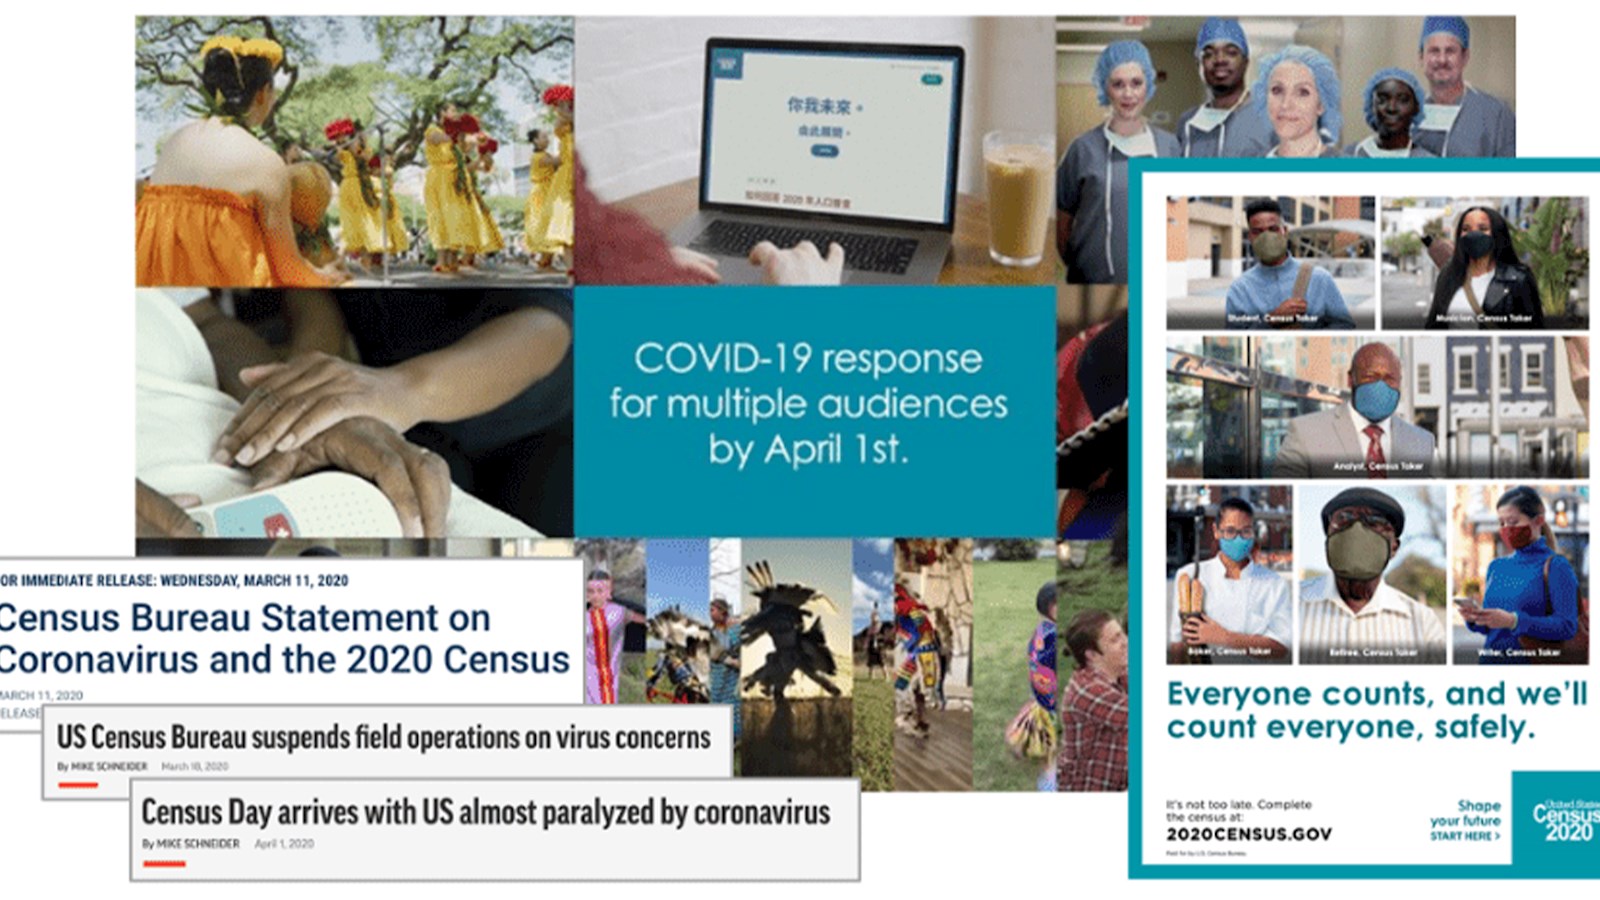 Headlines about coronavirus and the census